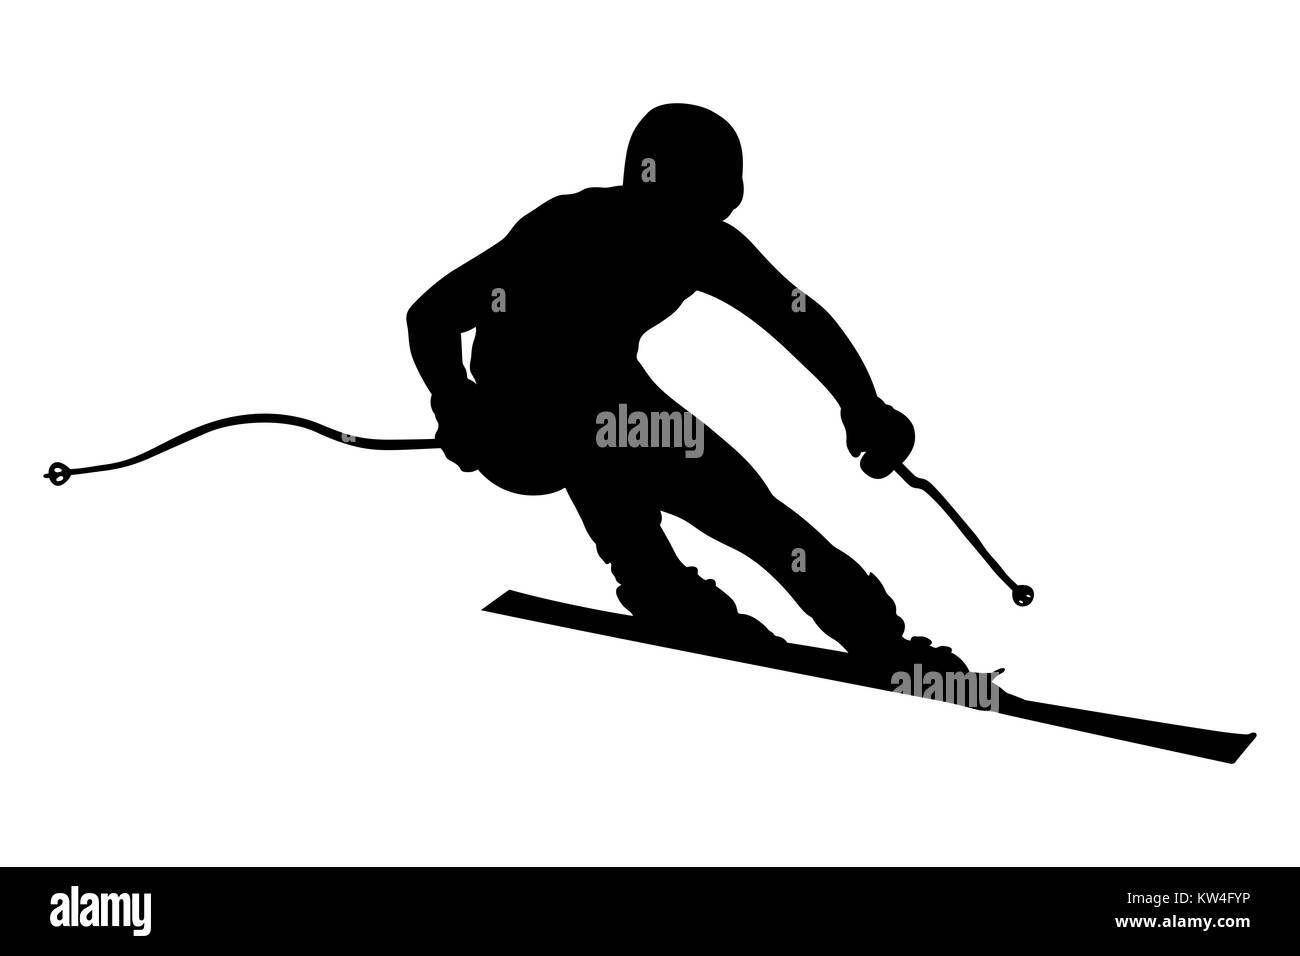 athlete skier super slalom skiing black silhouette Stock Photo